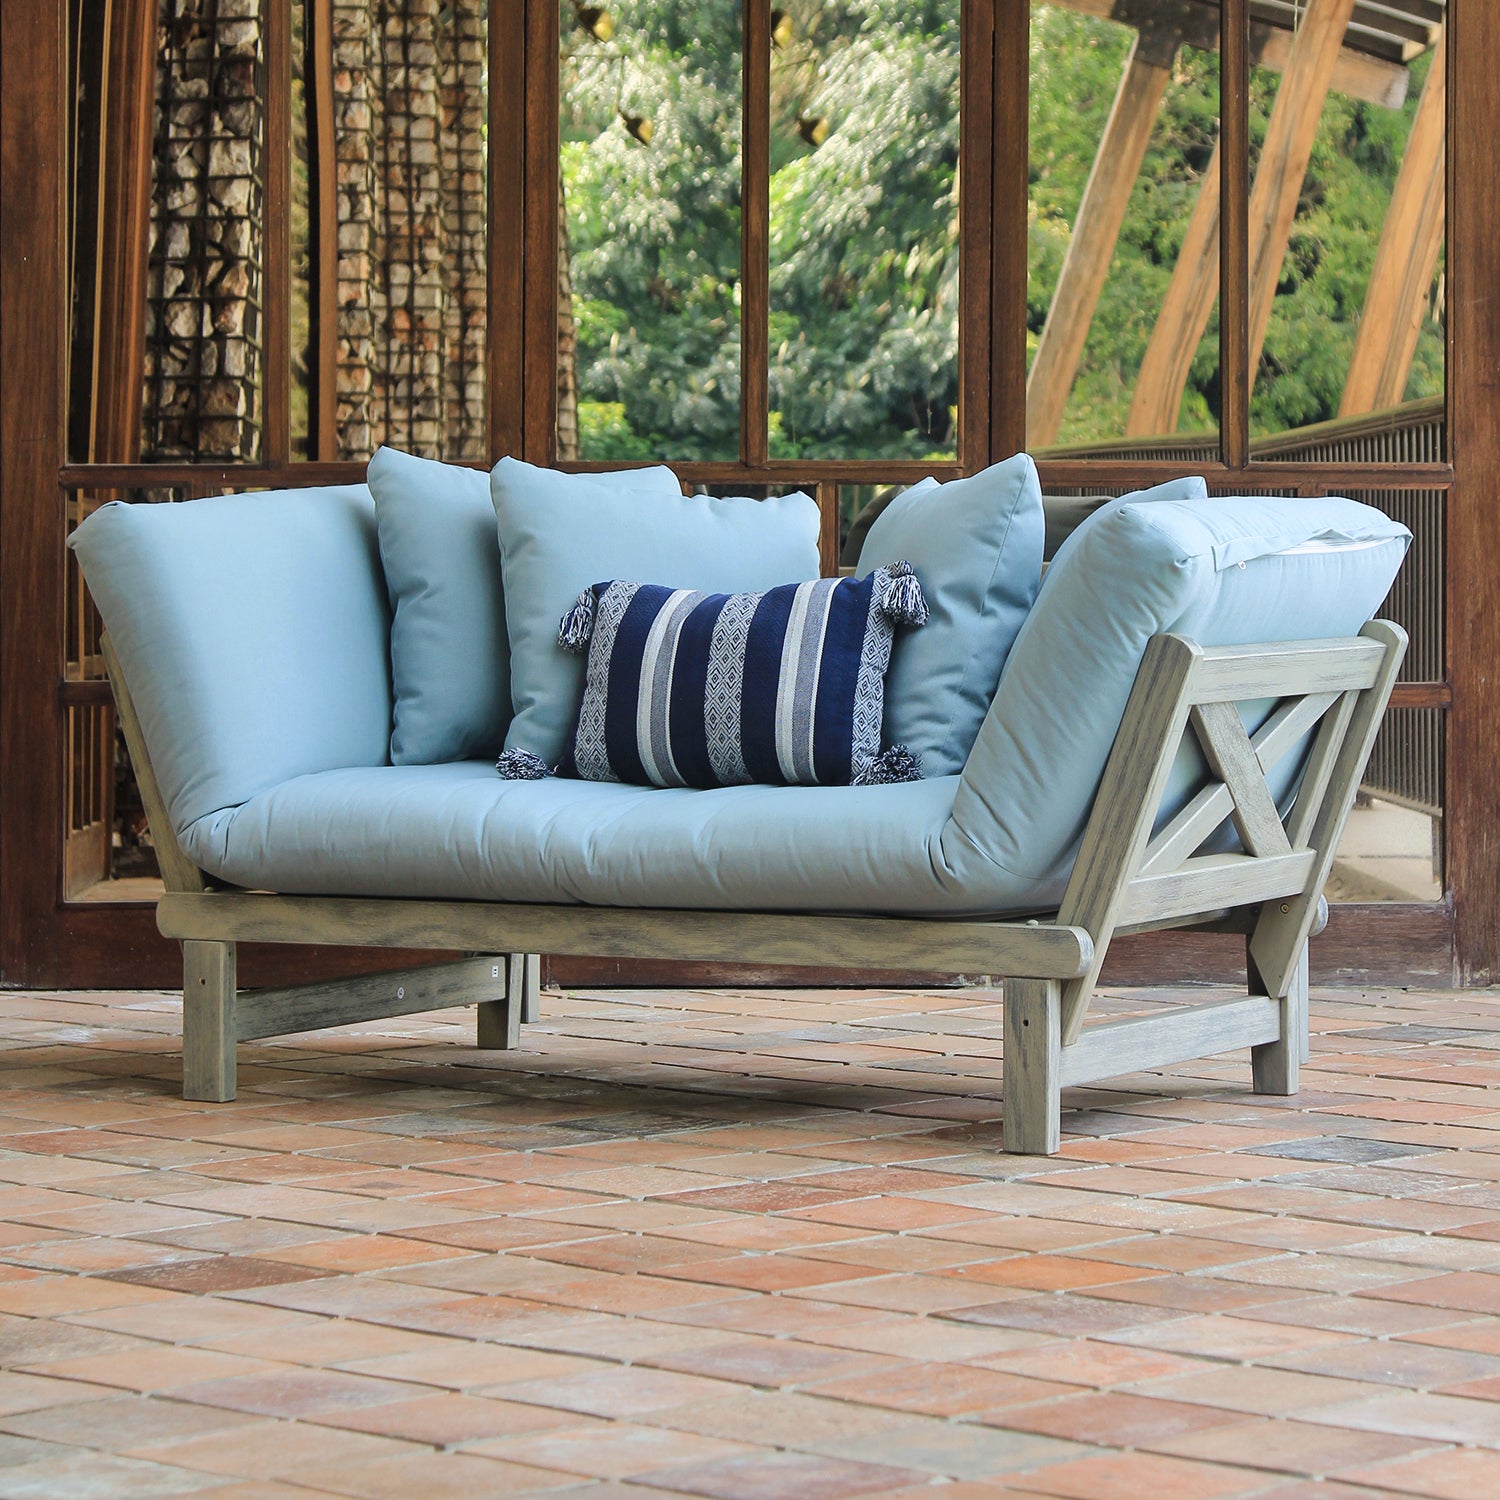 Carlota Mahogany Wood Outdoor Convertible Sofa Daybed - Weathered Gray Wood / Blue Spruce Cushion - Cambridge Casual